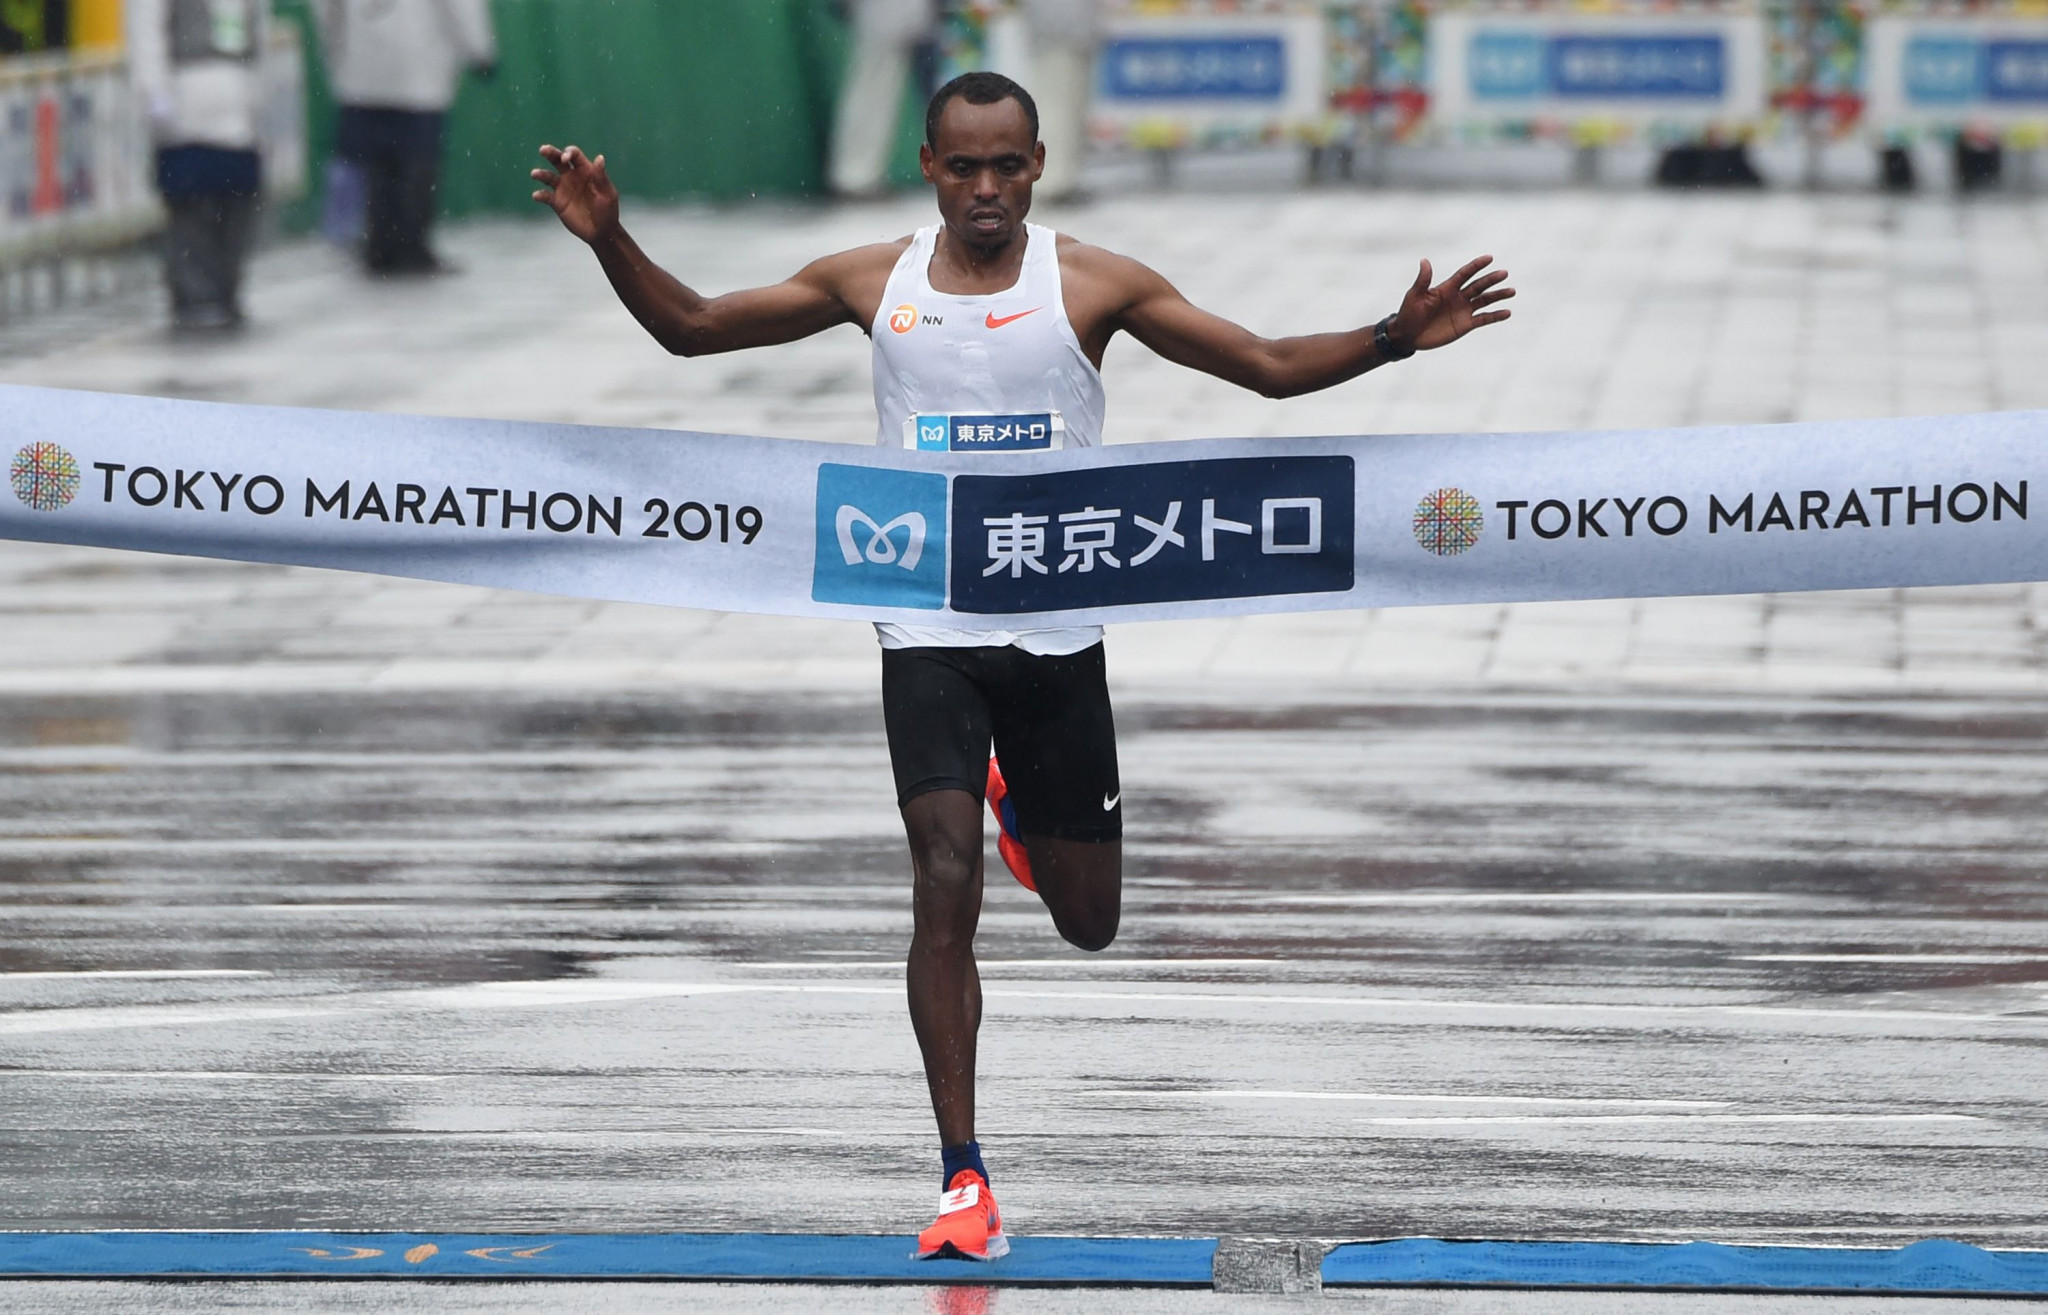 Legese and Aga aim to defend Tokyo Marathon titles